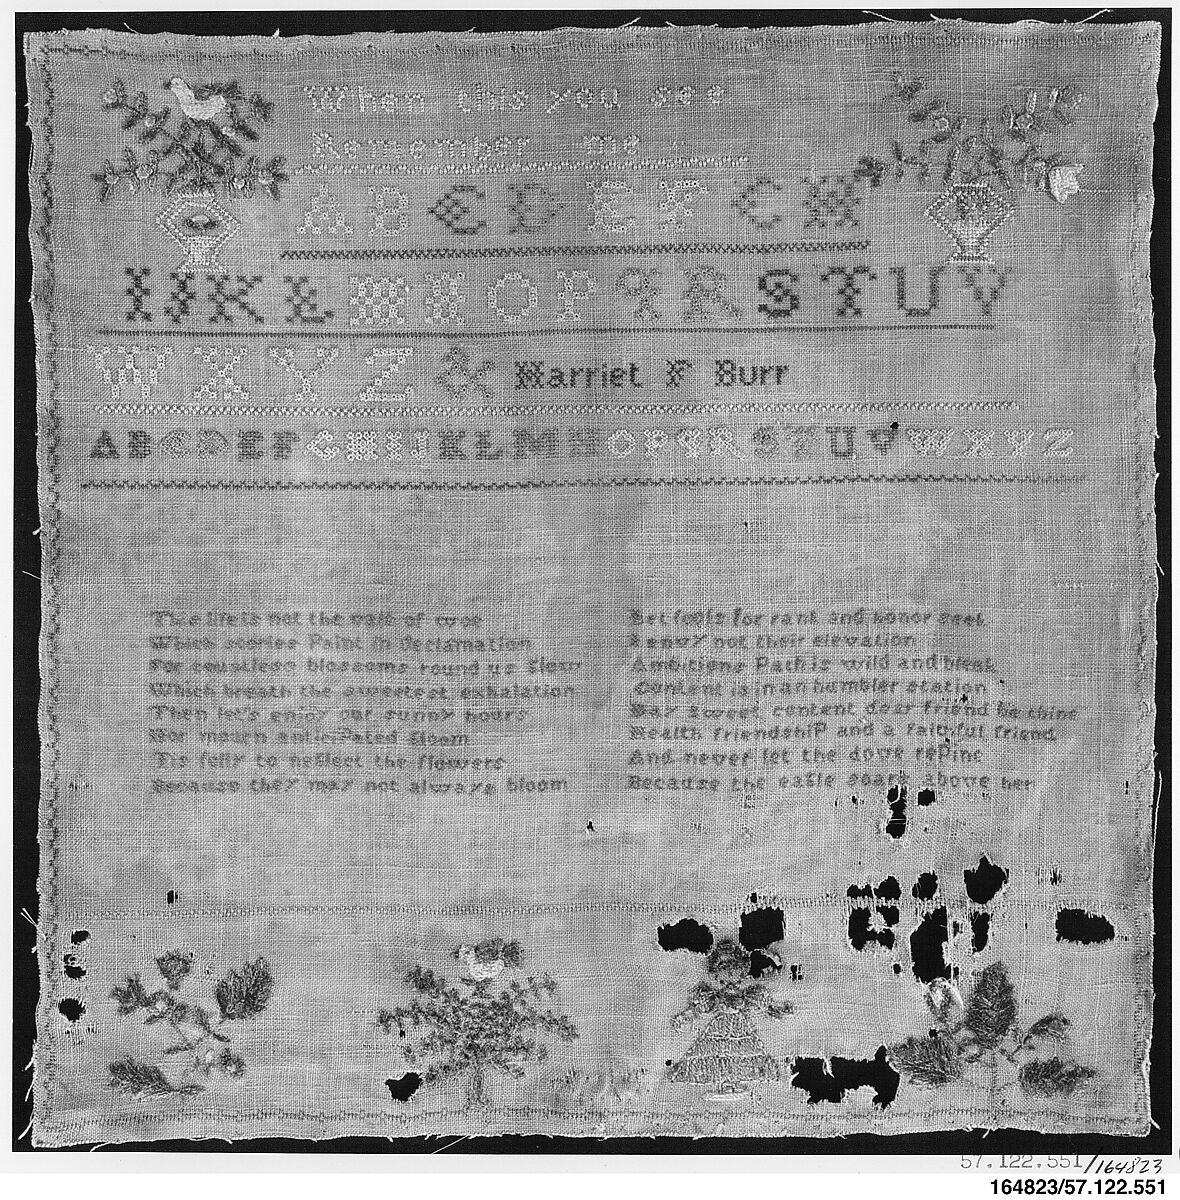 Embroidered sampler, Harriet F. Burr (born 1794), Silk on linen, embroidered, American 